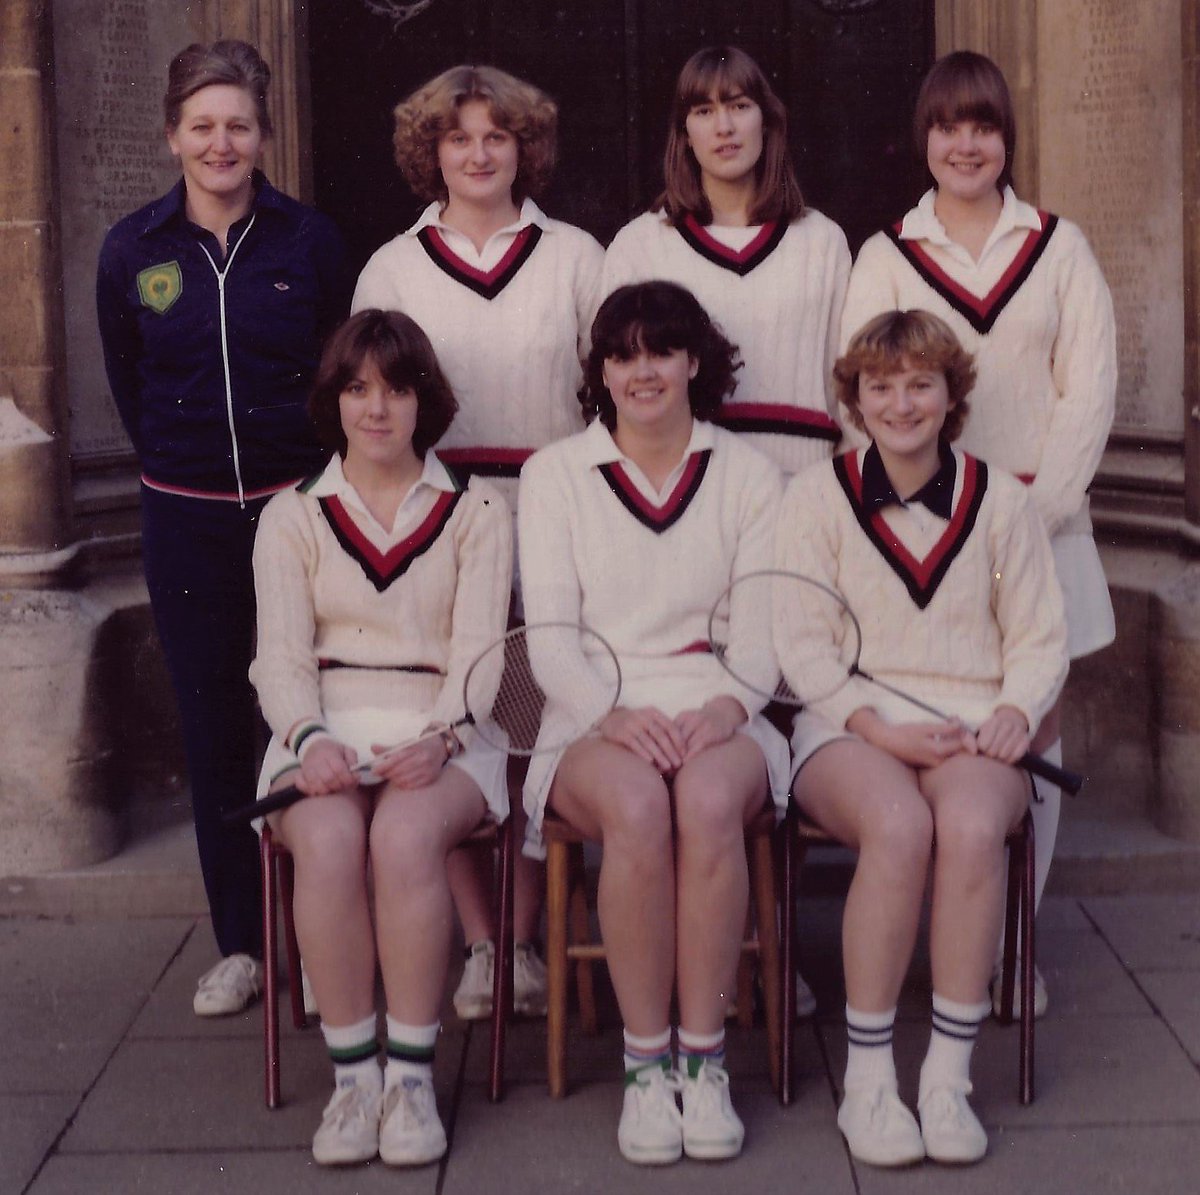 Our @OakhamSch girls badminton team from 1978 - 1979. #NSHD2019 #sportingheritage #badminton